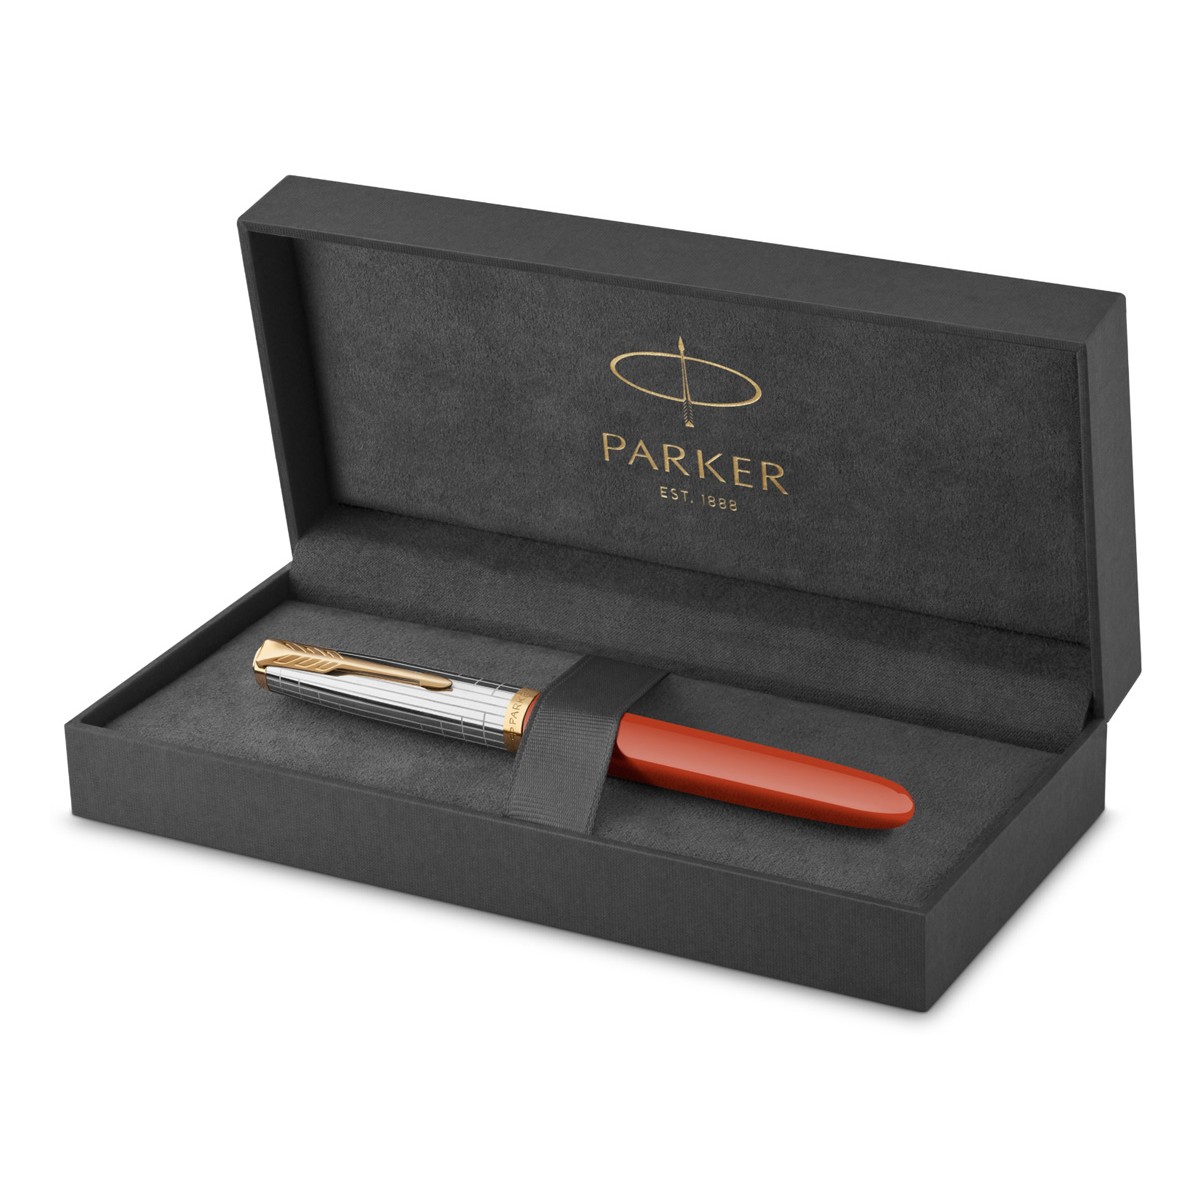 Parker - 51 Premium - Red Rage - Stilografica